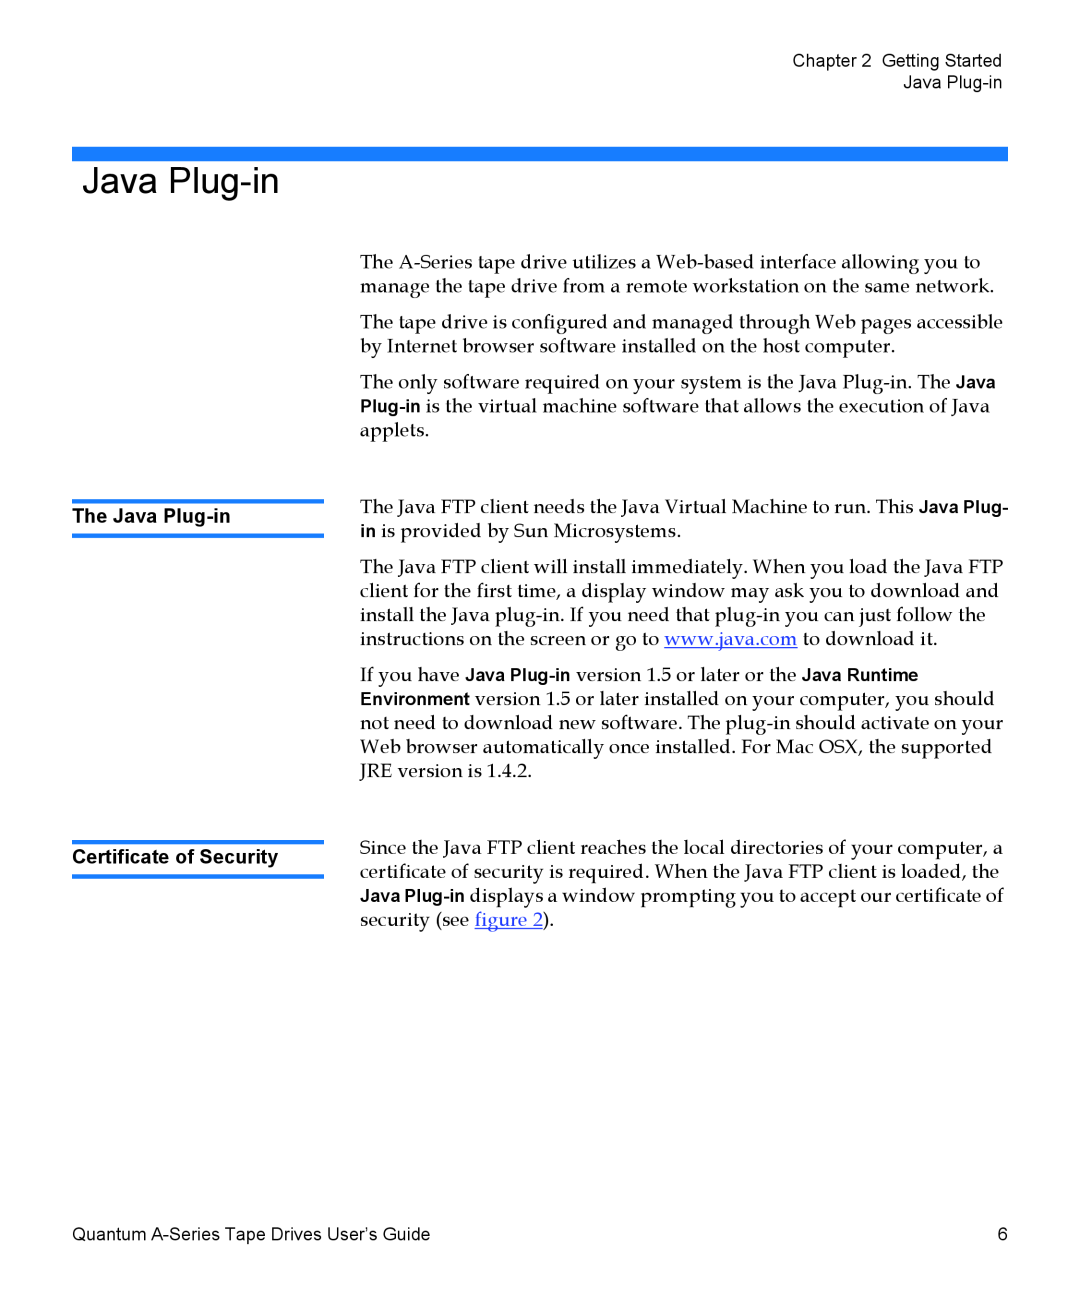 Quantum A-Series manual The Java Plug-in Certificate of Security 